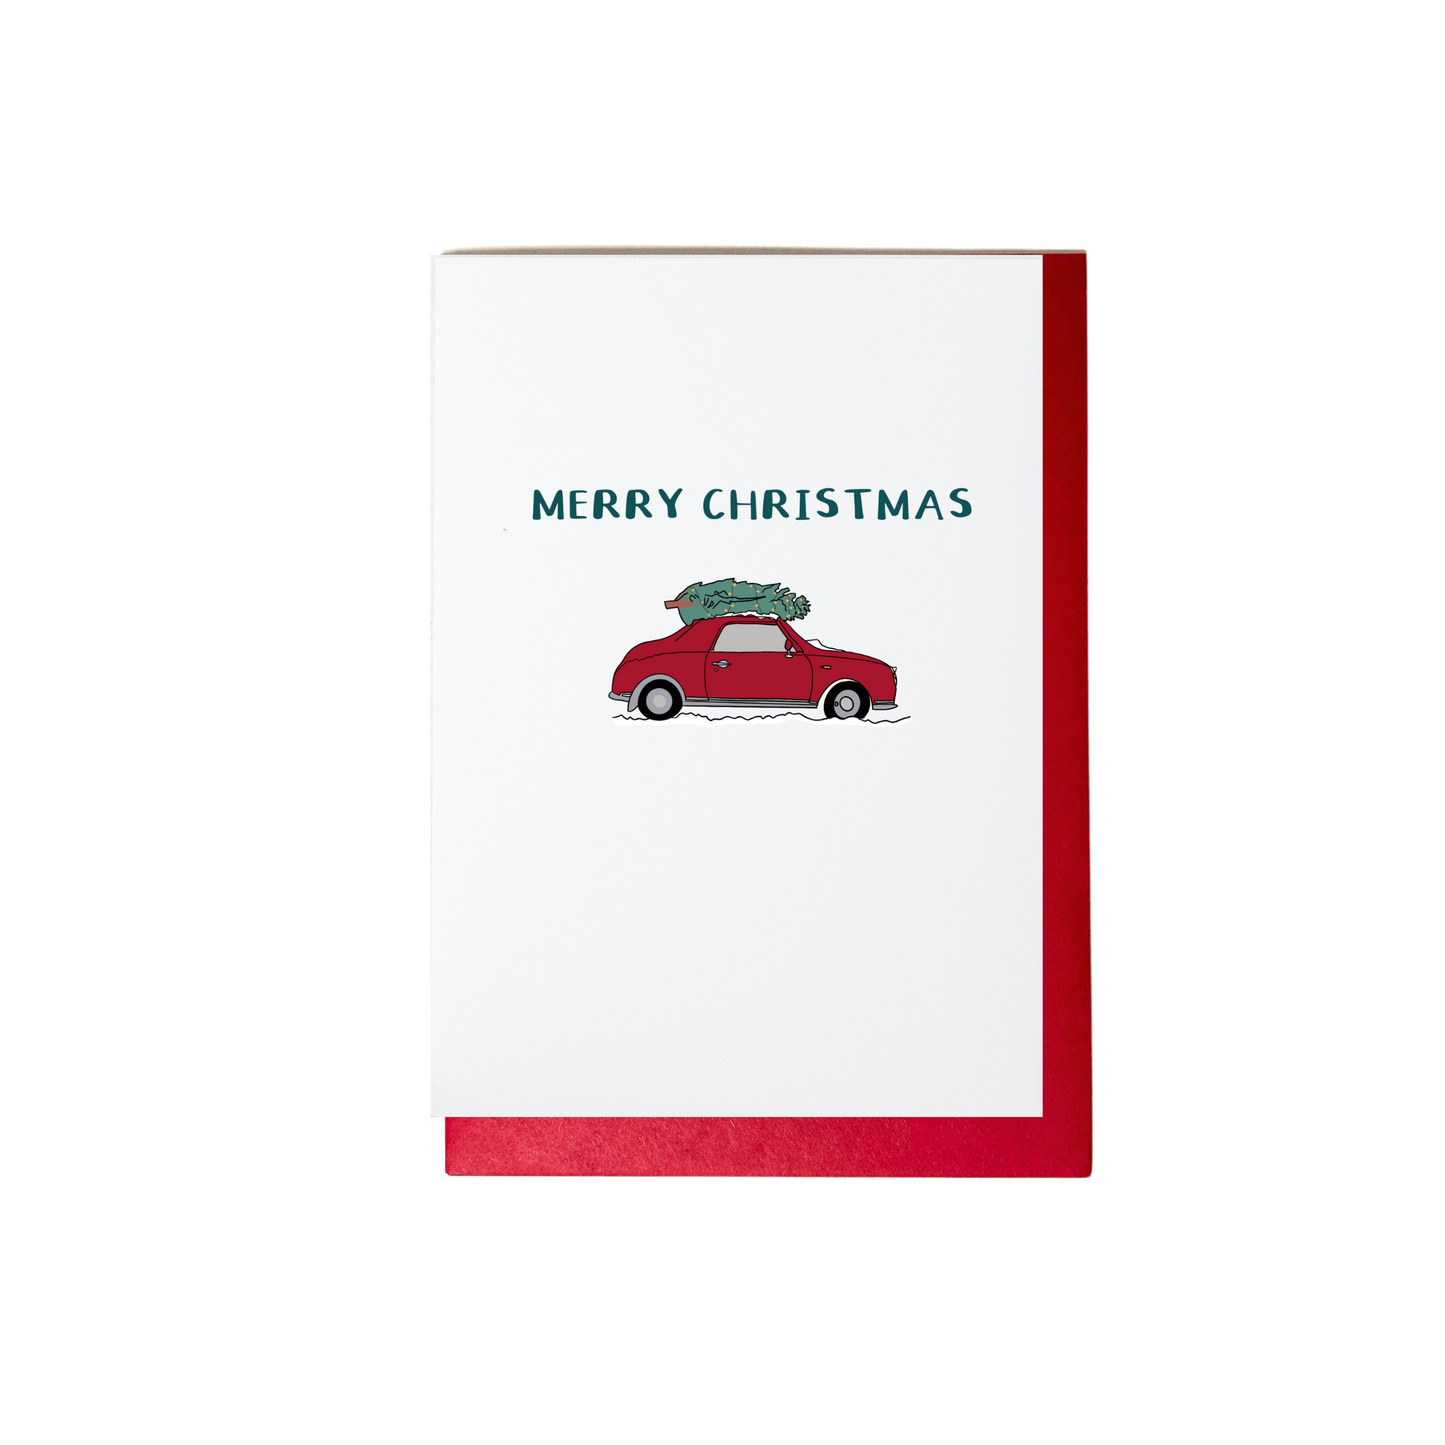 Merry Christmas Car & Tree Christmas Card